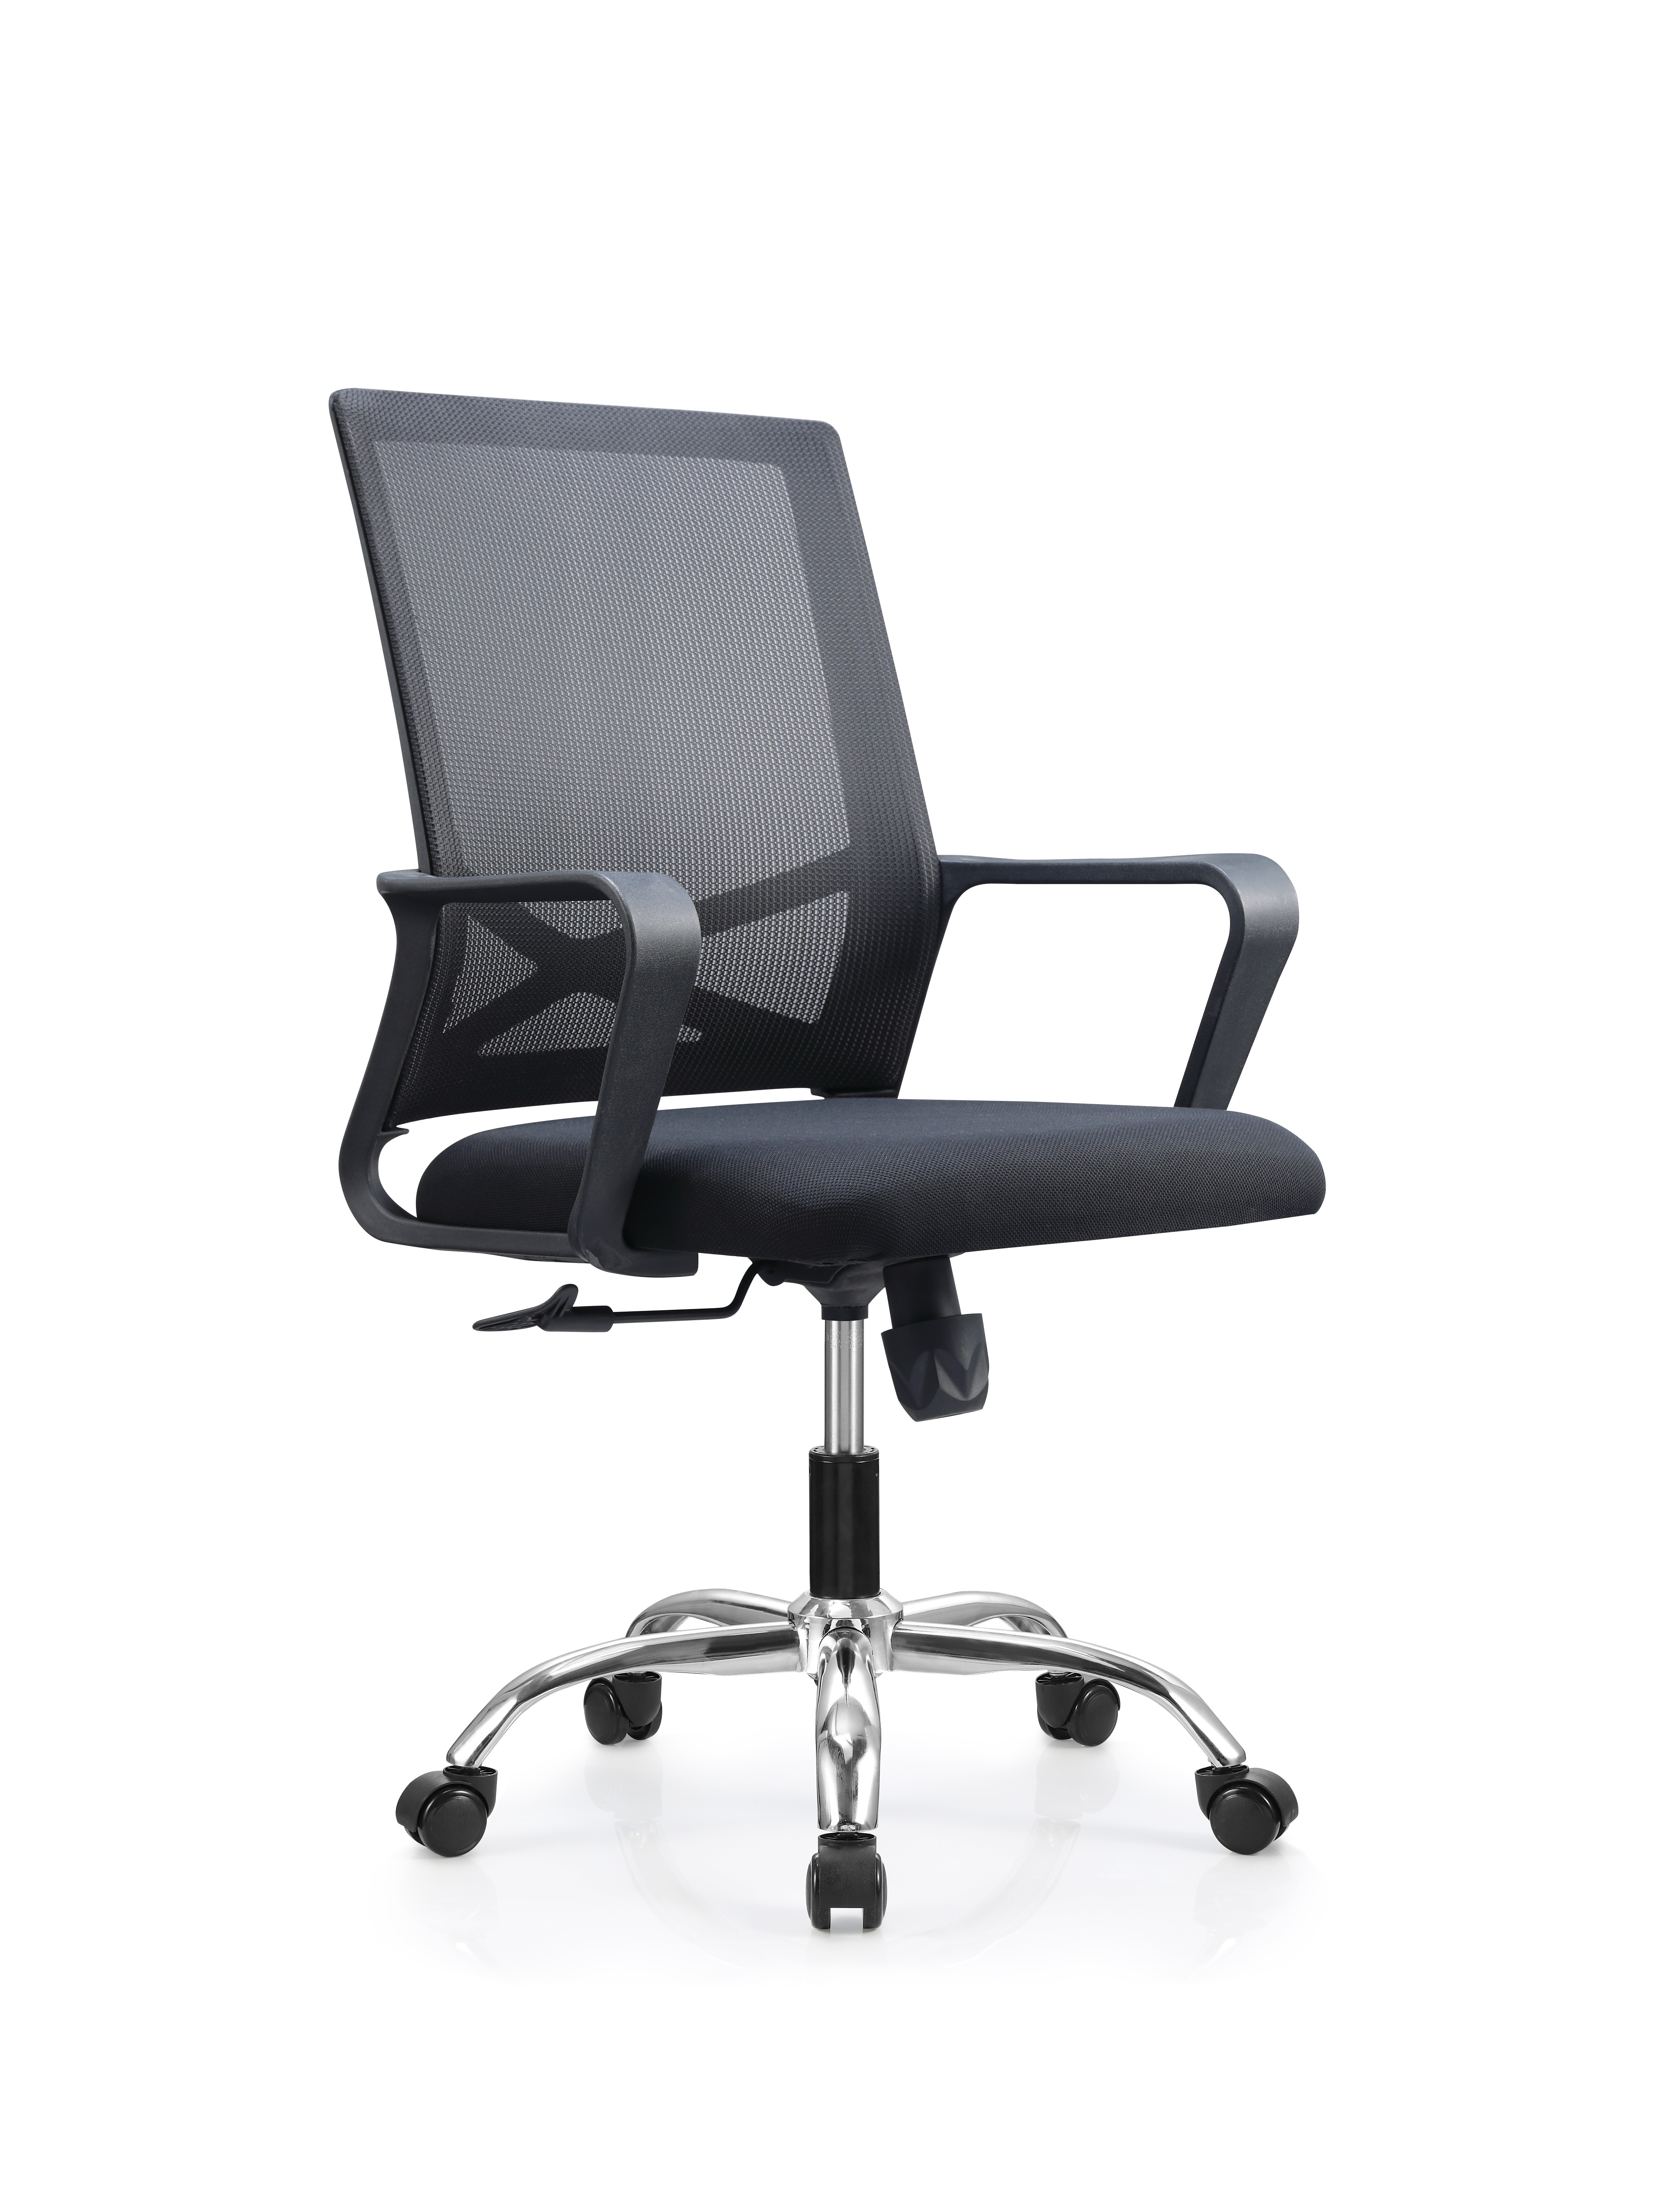 2024 Newcity 552B מכירות חמות כיסא רשת מסתובב עיצוב מודרני כיסא רשת ועידה מתכוונן מחיר טוב כיסא משרד מנהלים במפעל מכירות ישירה כיסא רשת ספק פושאן סין